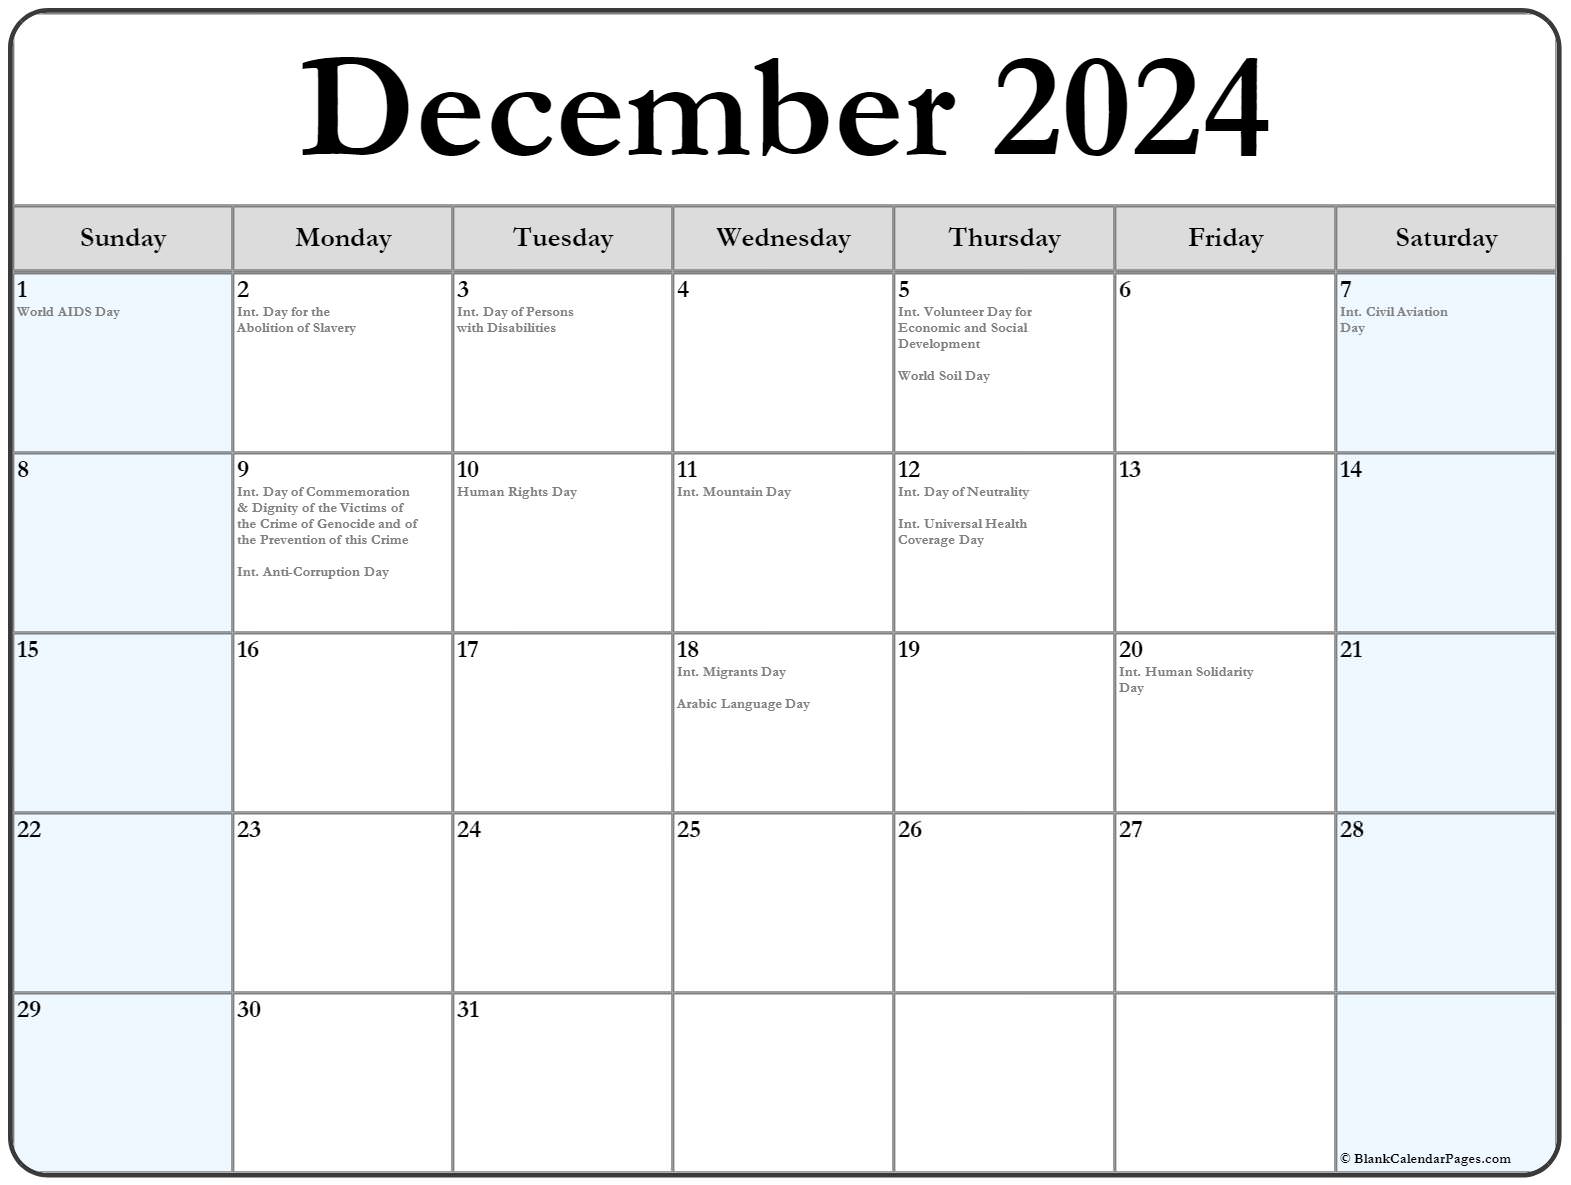 December 2021 calendar with holidays